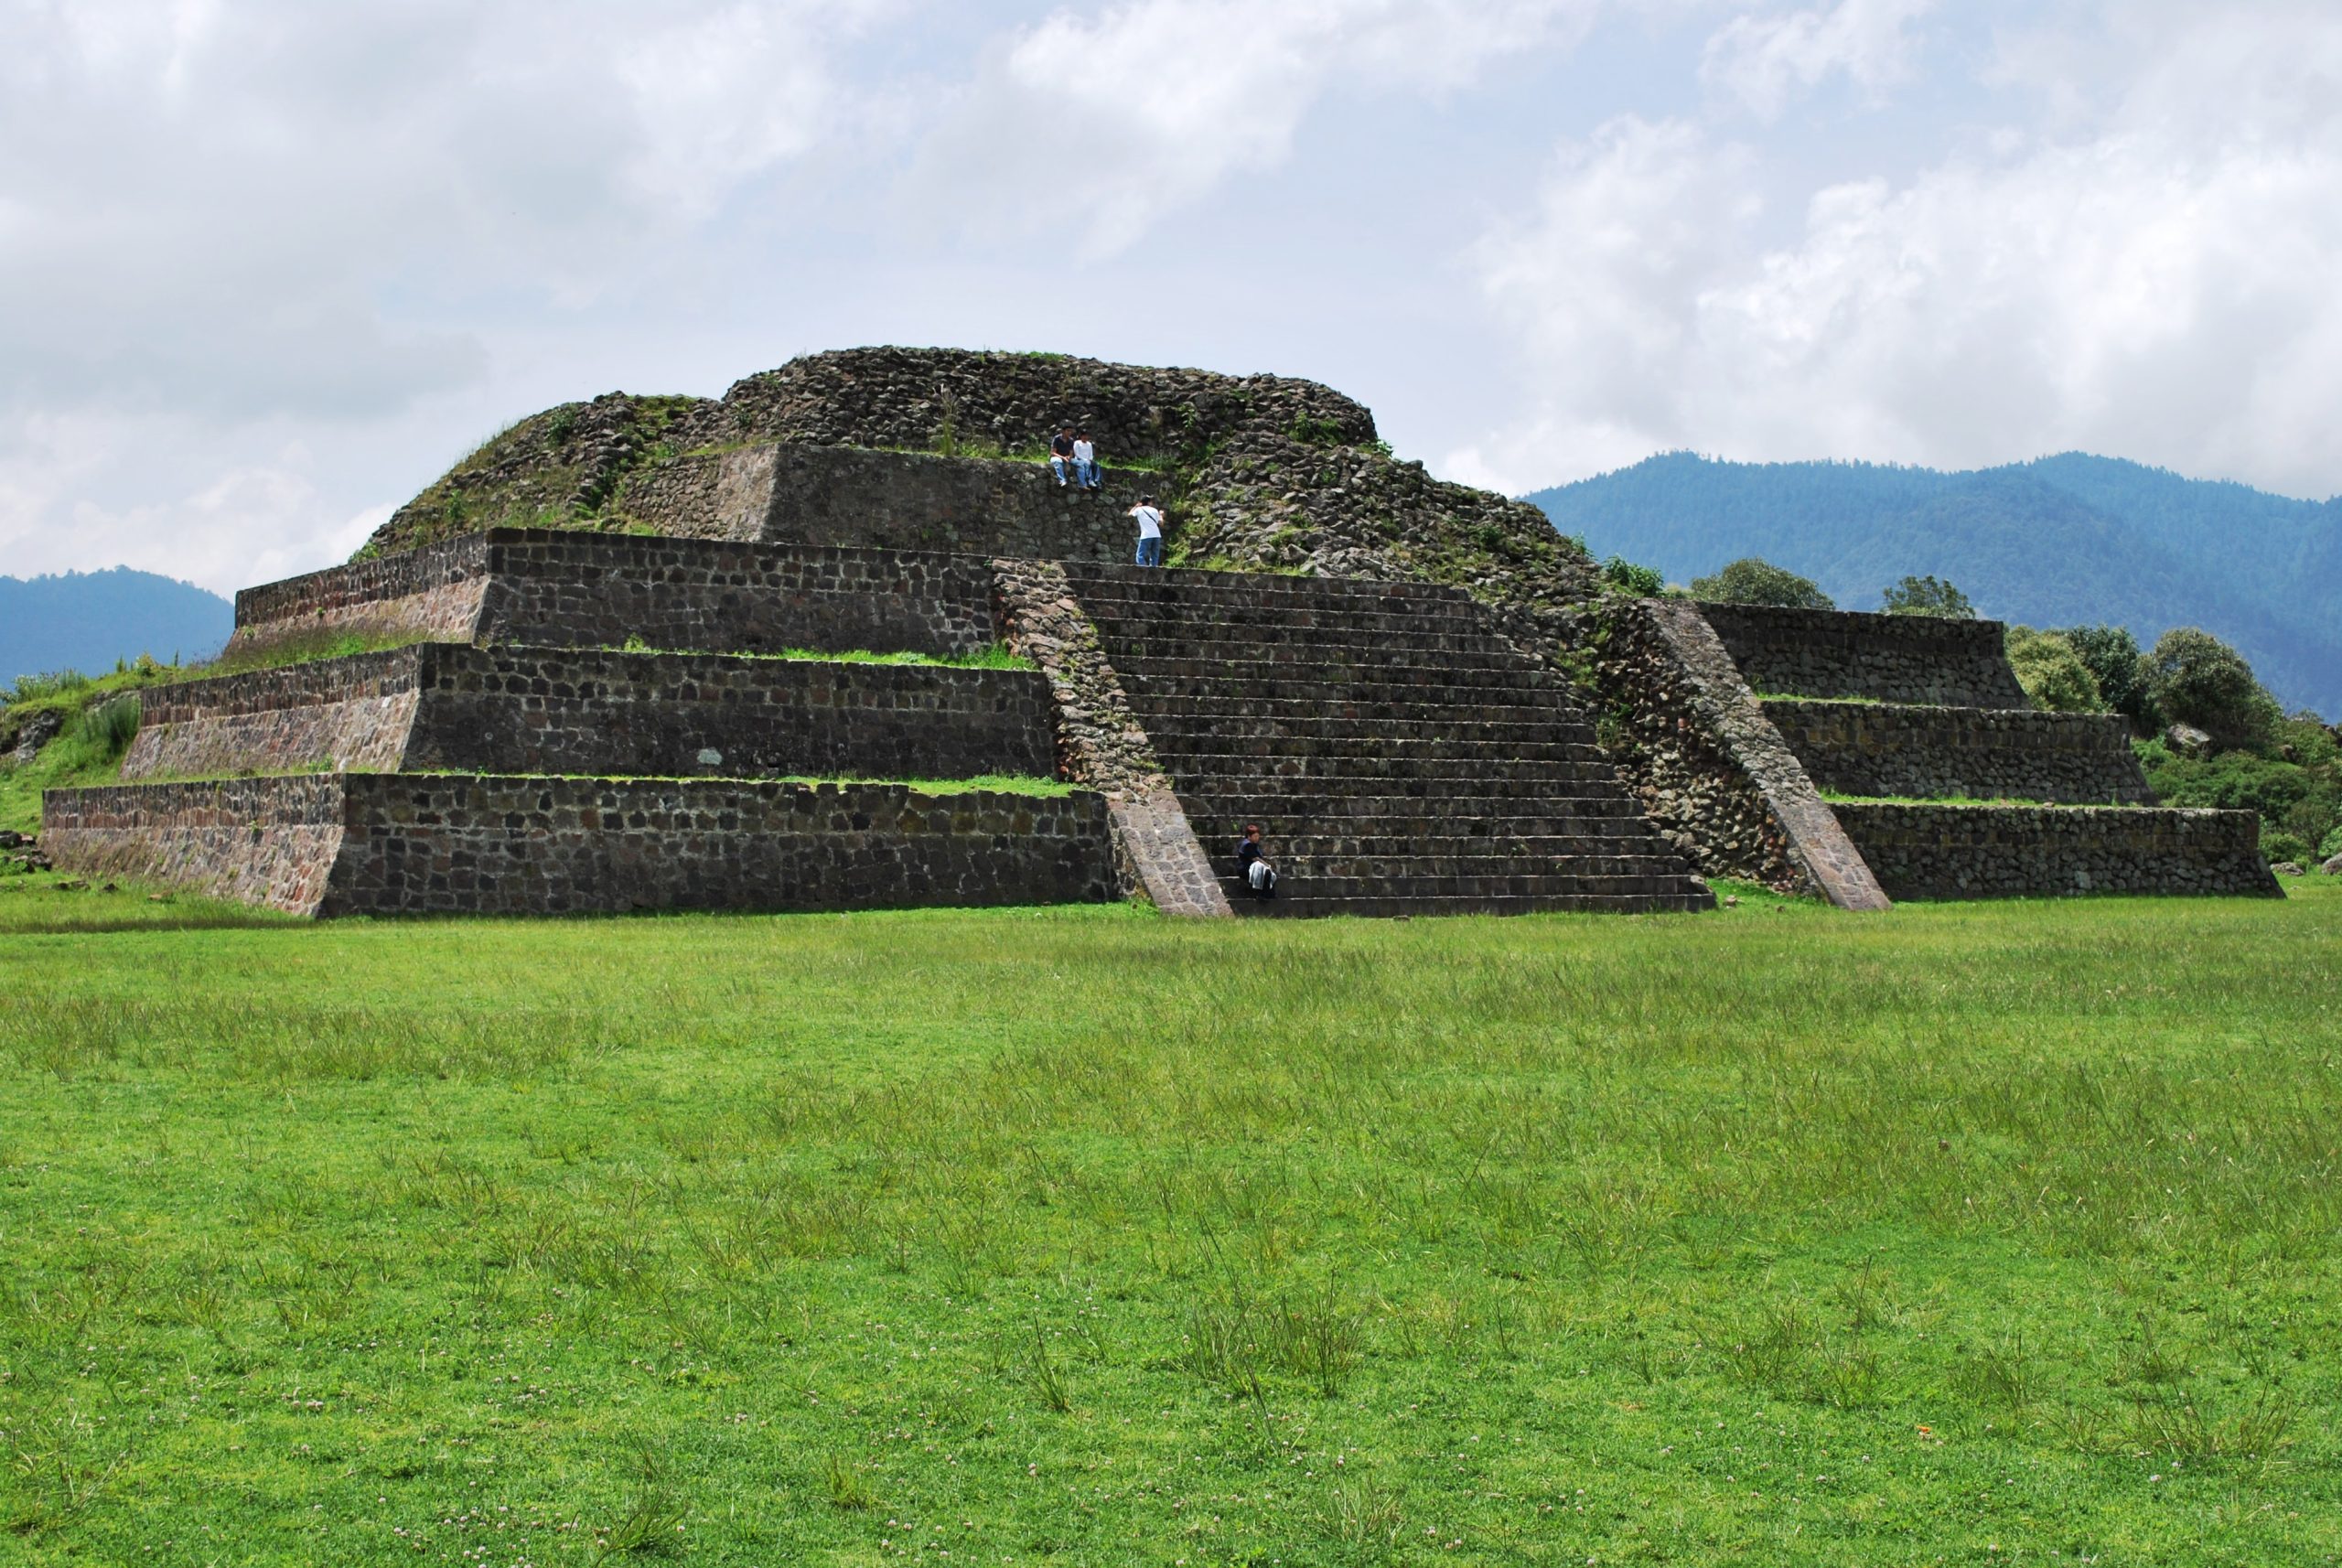 Teotenango pyramid